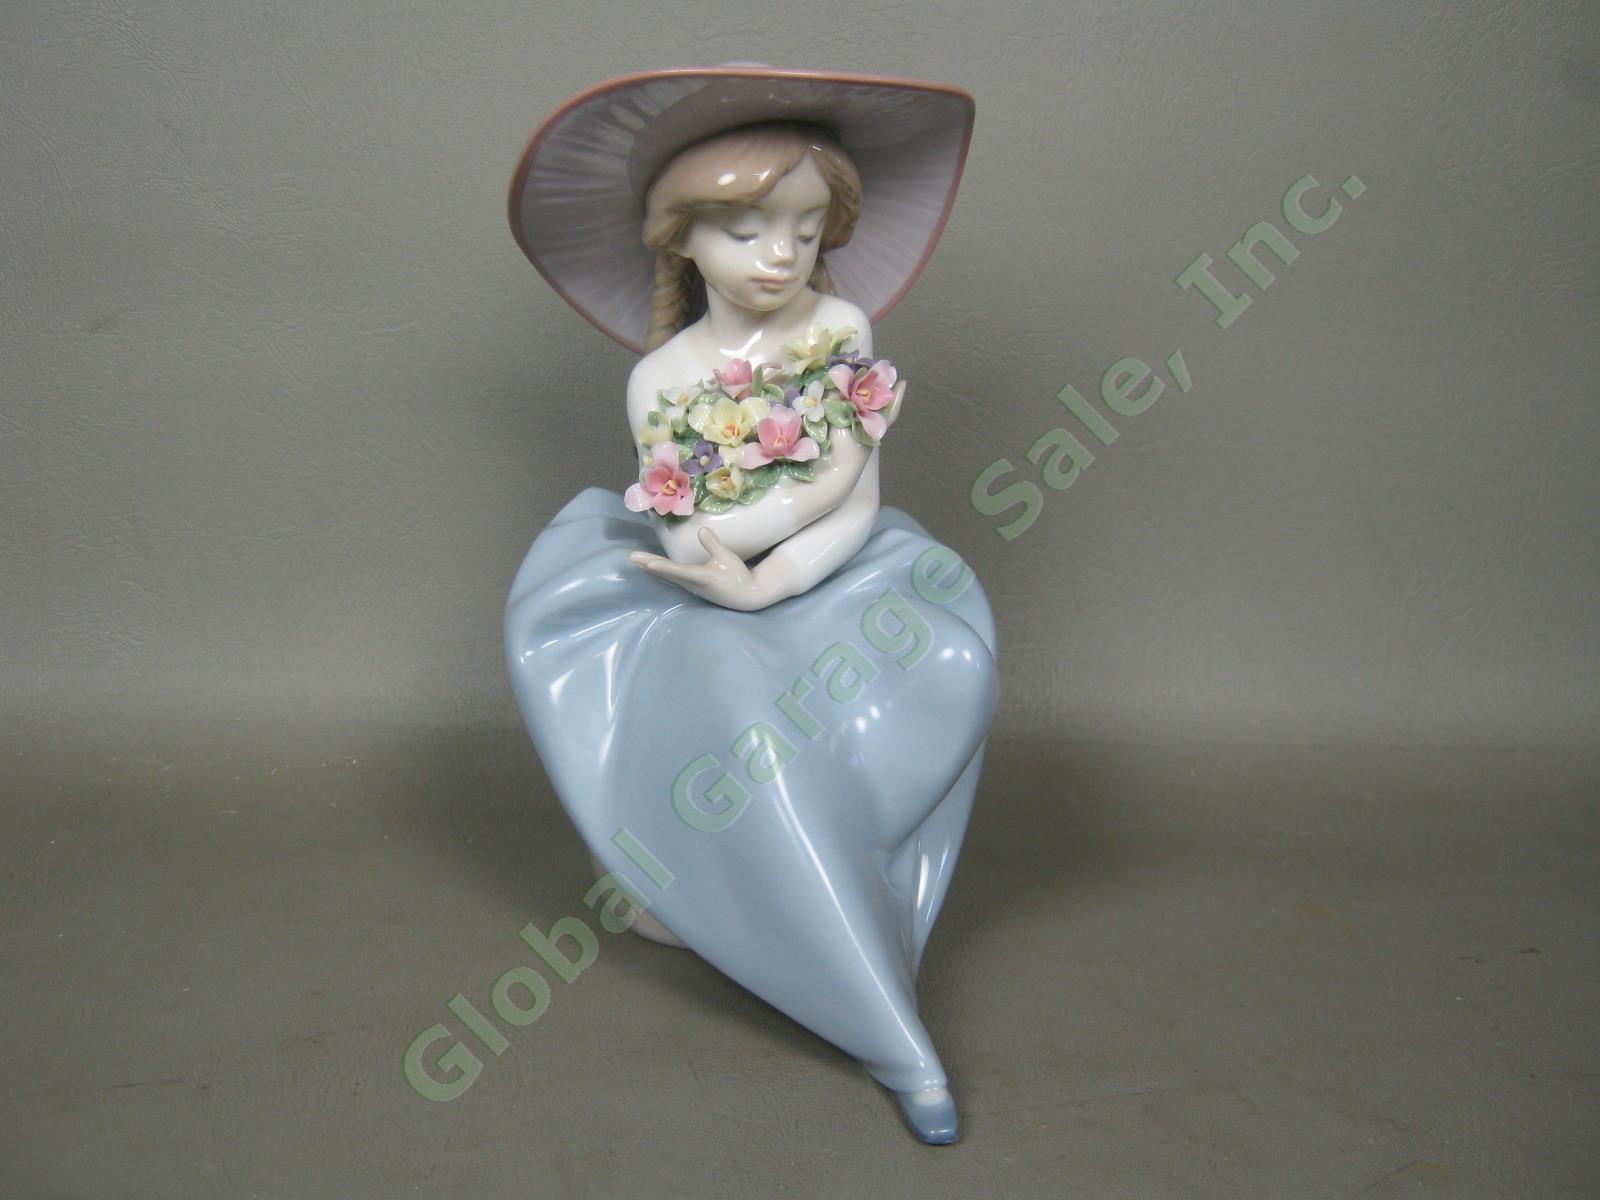 Vtg 1990 Lladro Figurine Fragrant Bouquet #5862 Girl w/ Flowers Mint In Box! NR! 1